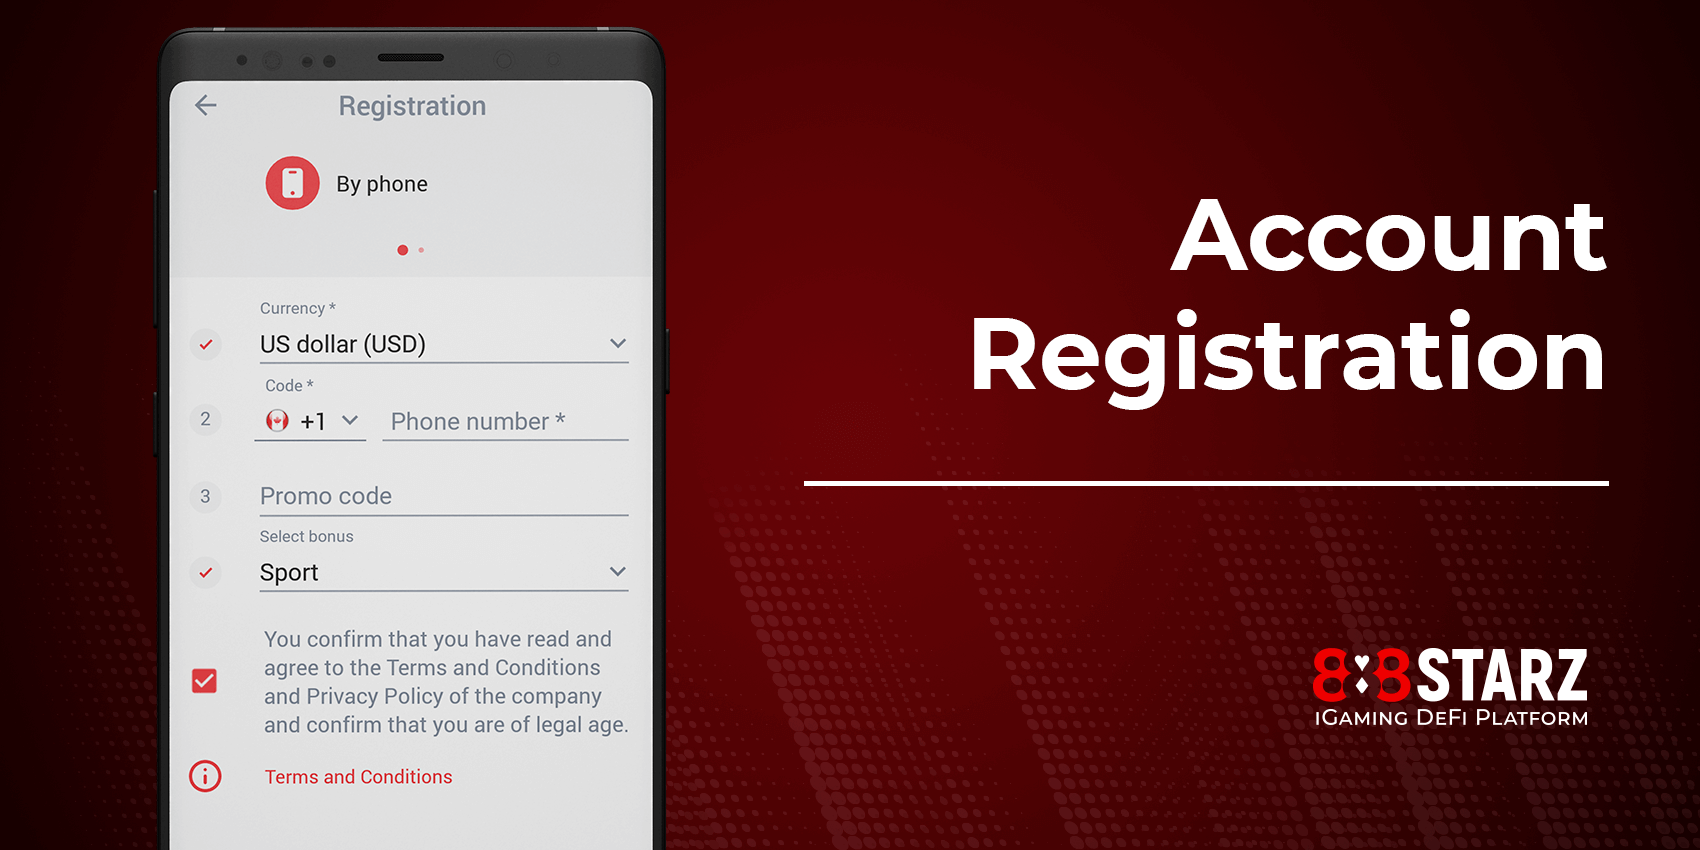 Account Registration via the App